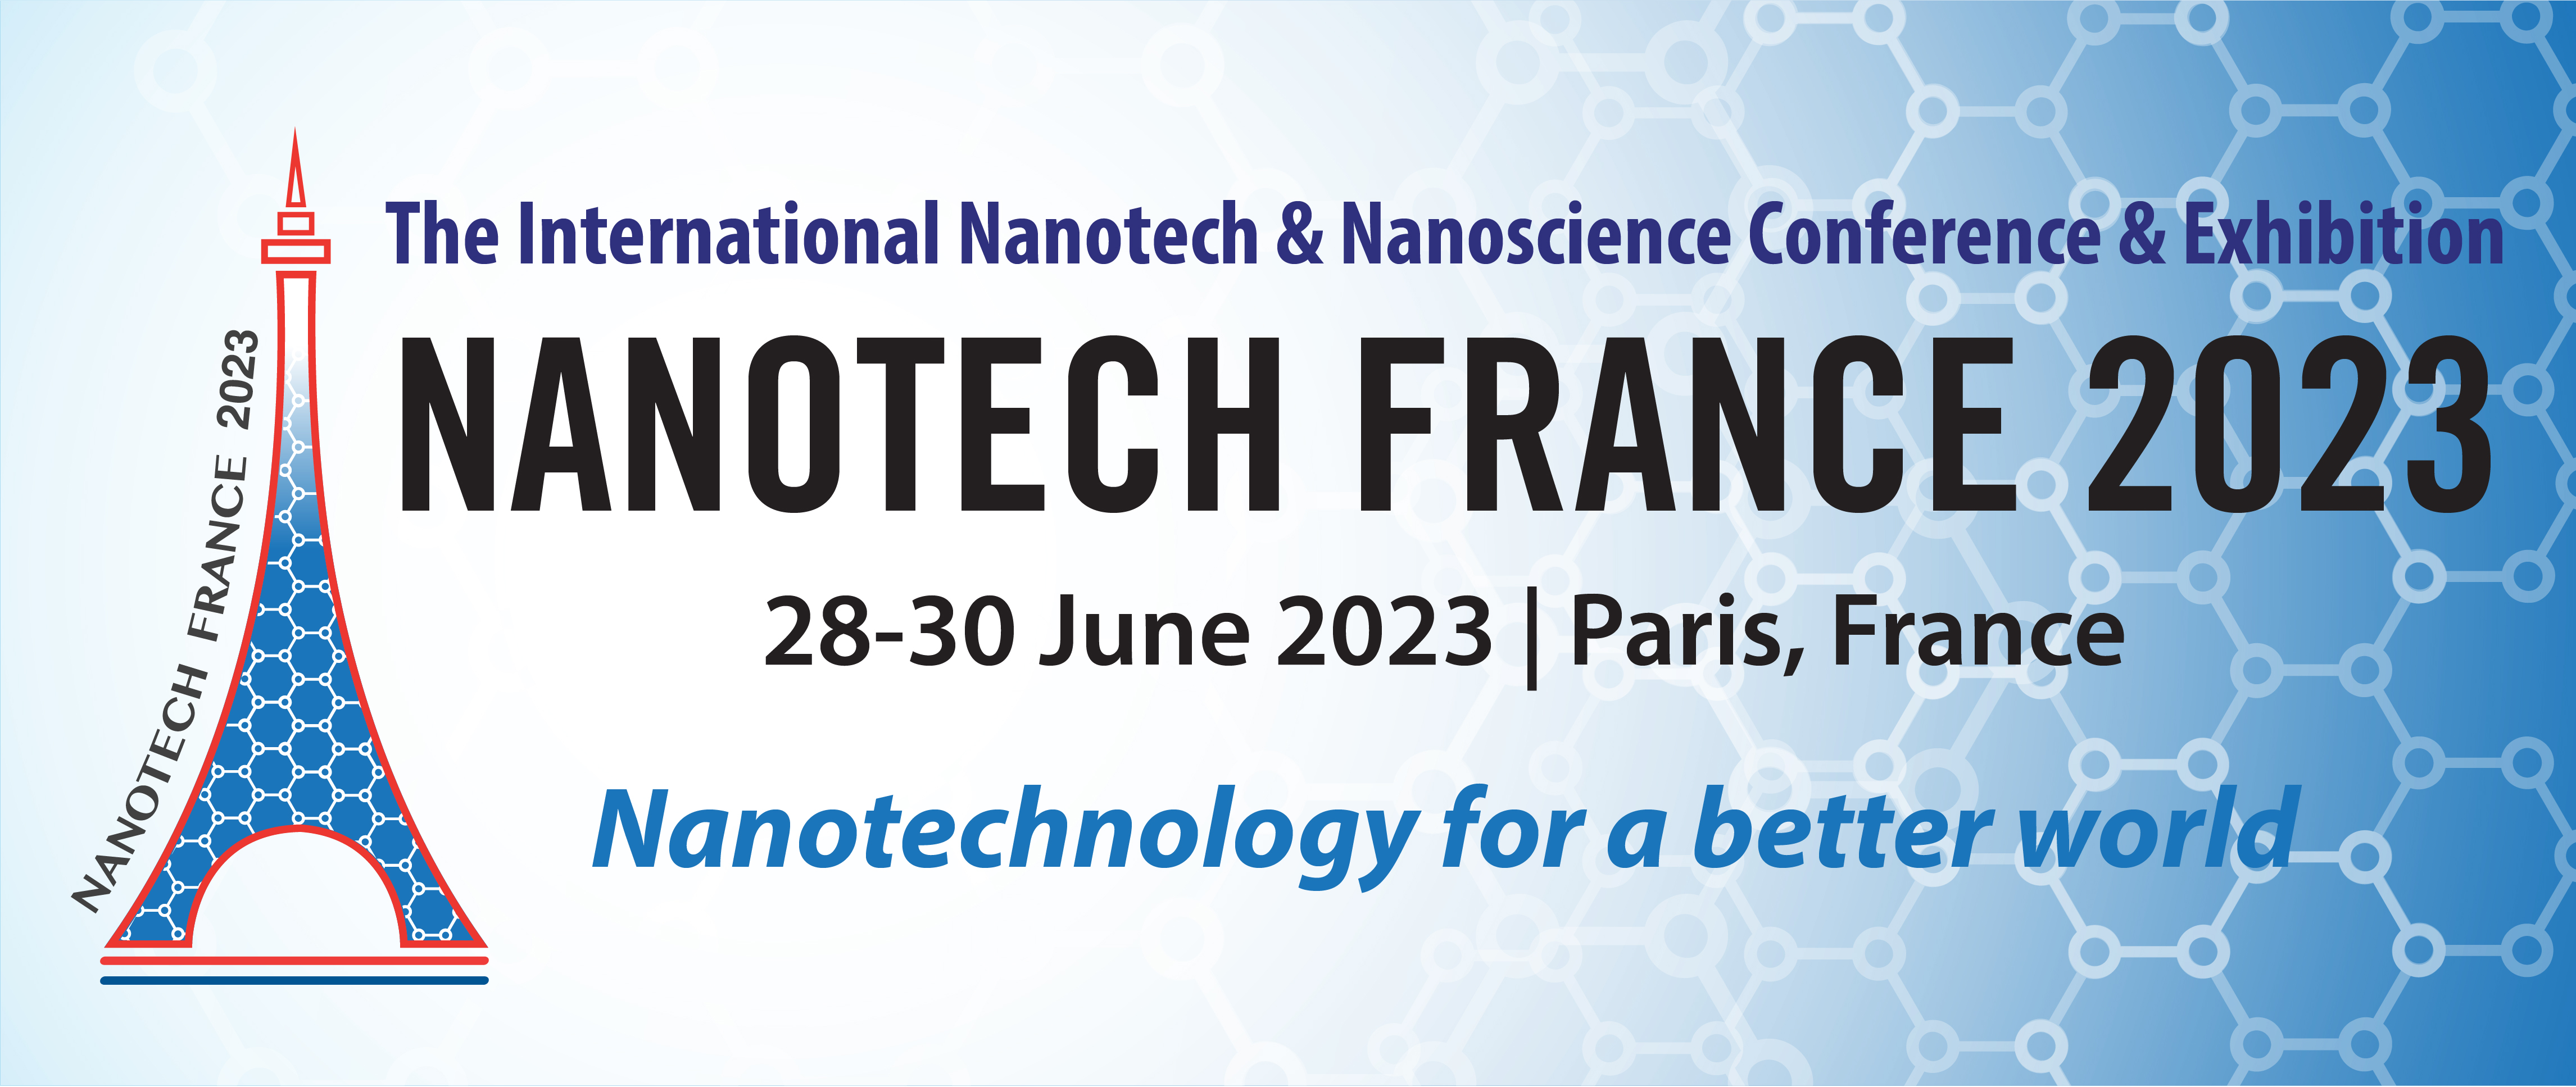 Nanotech France 2023 Conference and Exhibition - Paris, France, 28 - 30 June, 2023